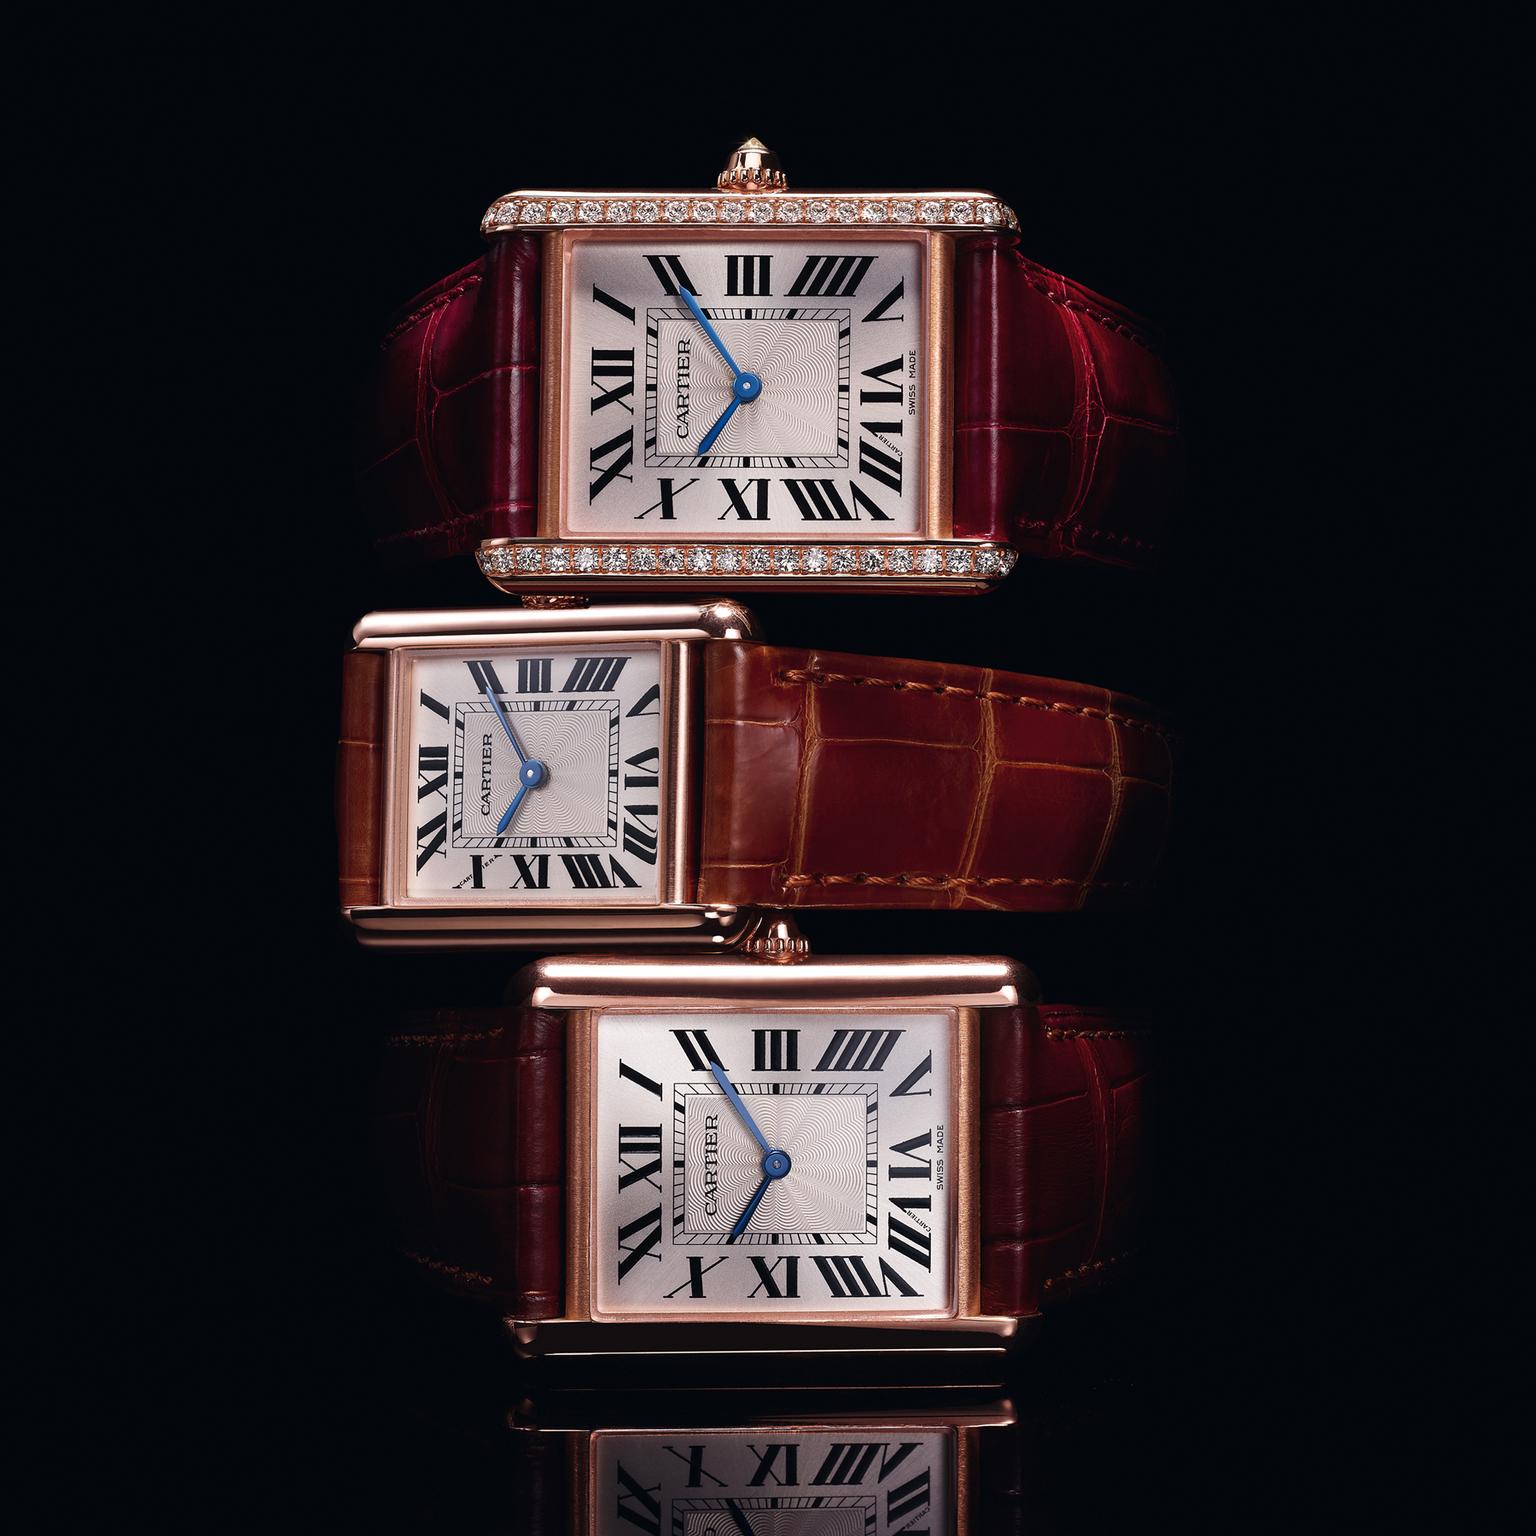 Tank Louis Cartier large watch in pink gold, Cartier